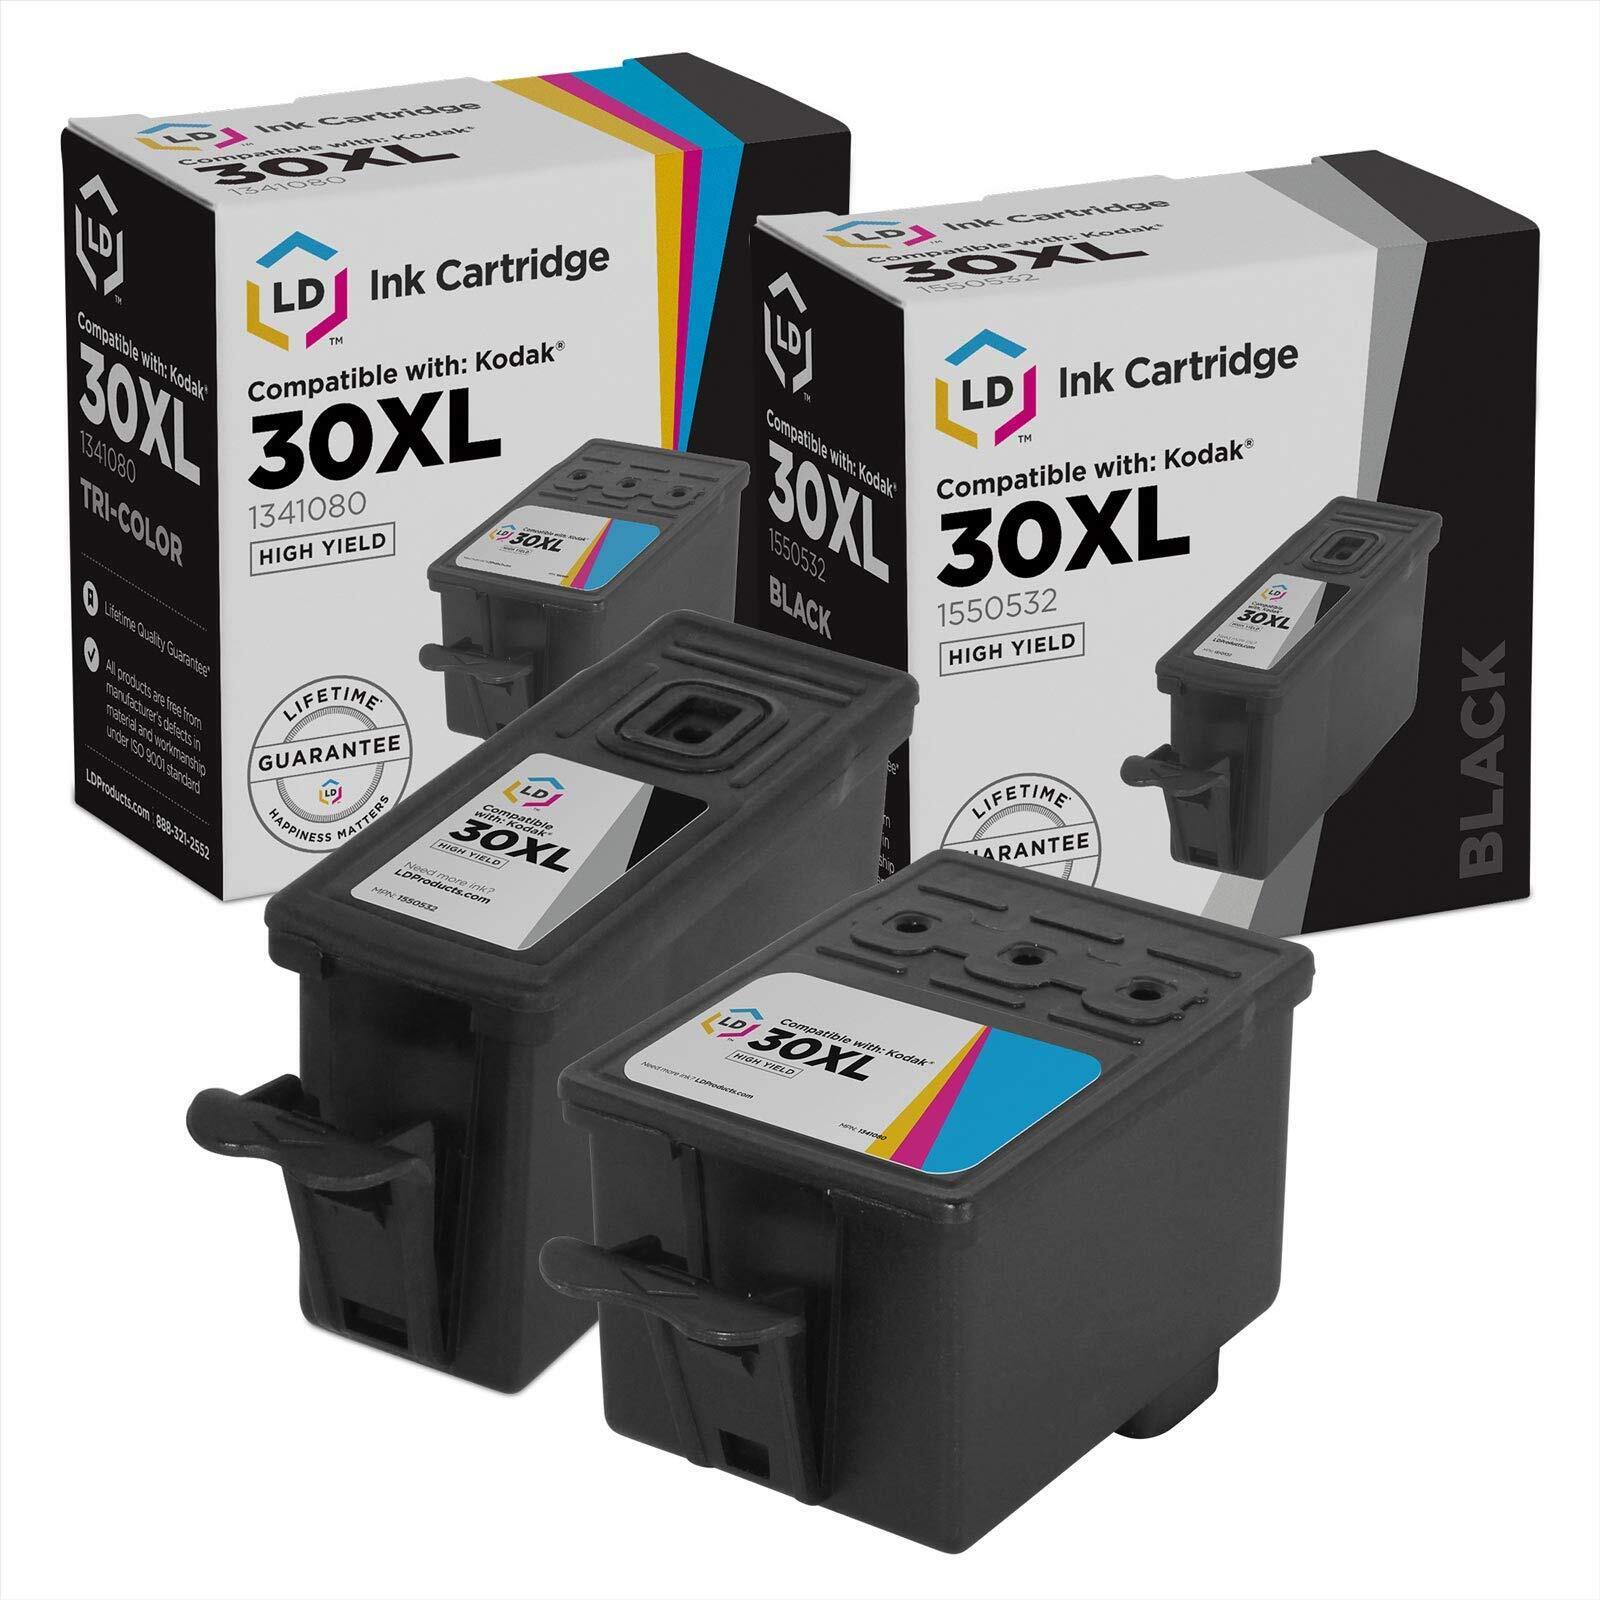 LD Comp for Kodak 30XL 2pk HY Ink 1x 1550532 1x 1341080 C110 C310 C315 2150 2170